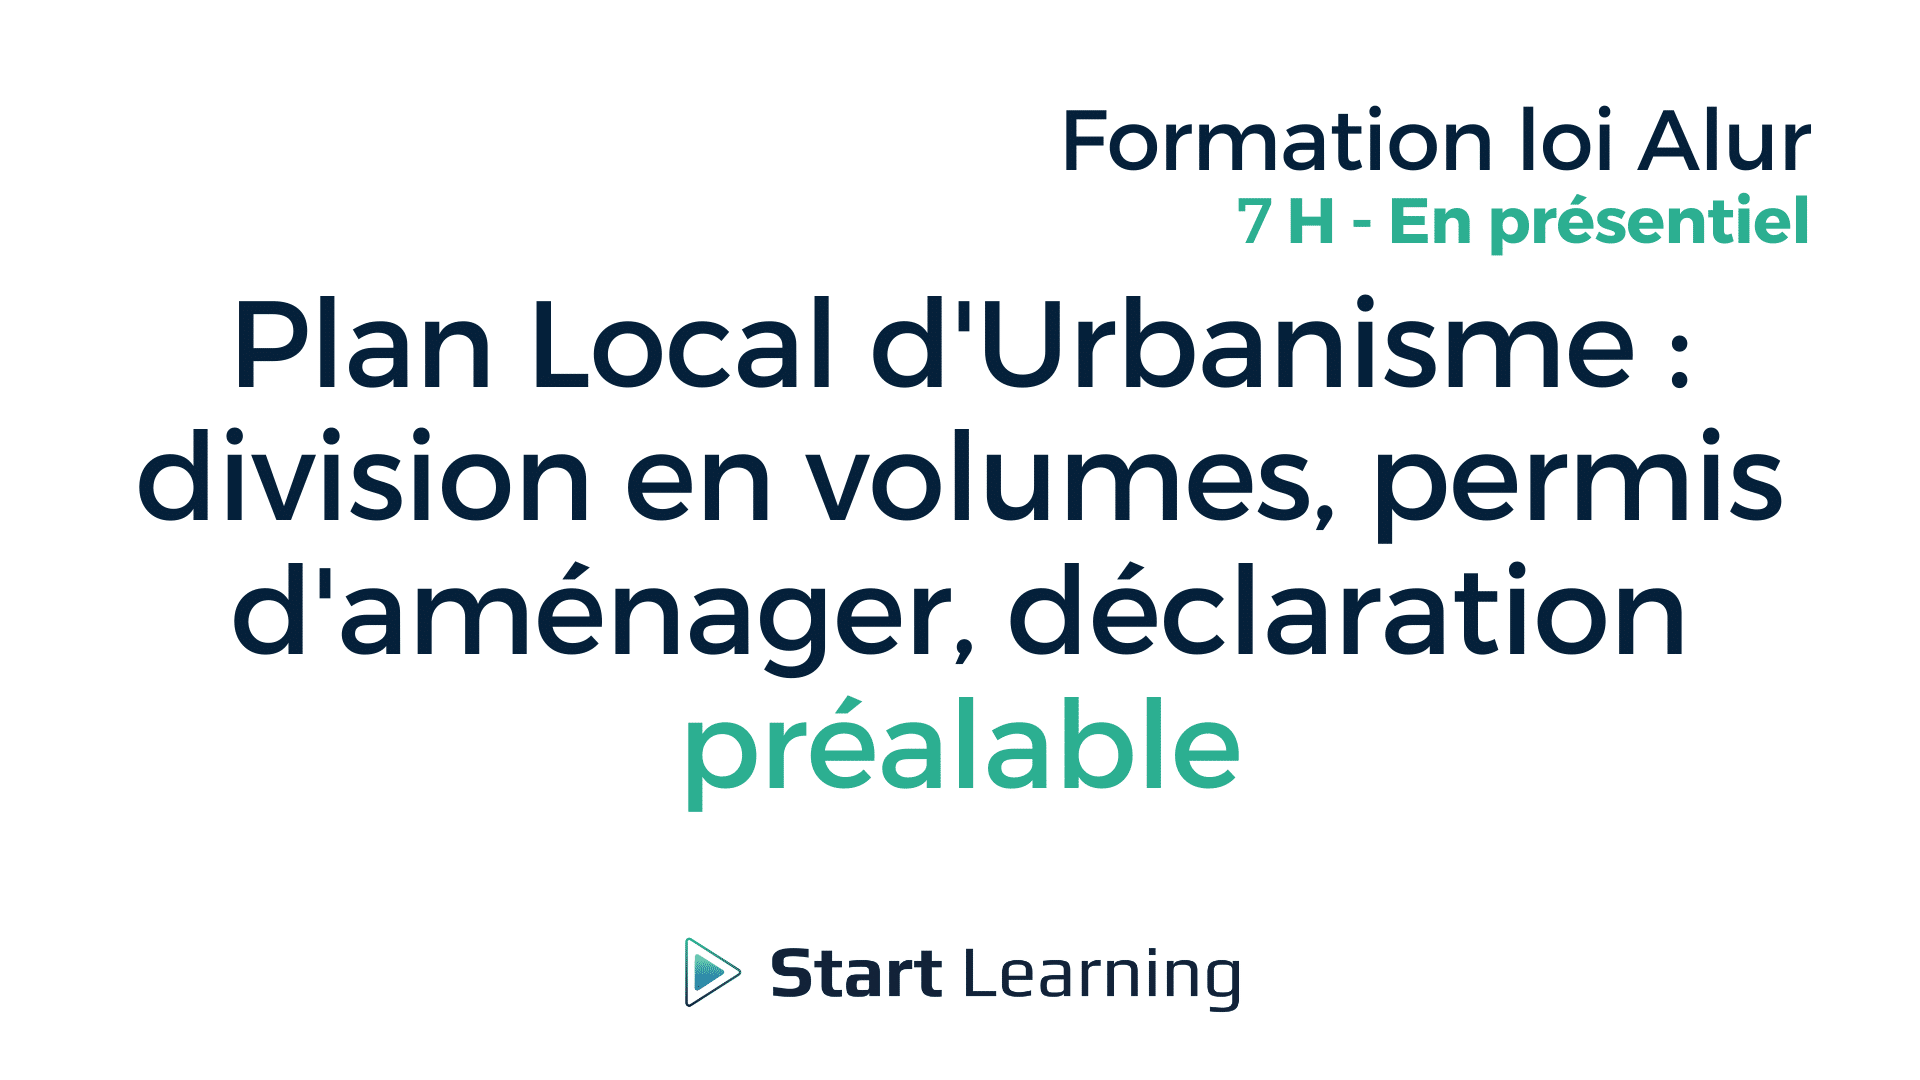 Plan Local d'Urbanisme_division en volumes, permis d'aménager, déclaration préalable - En présentiel